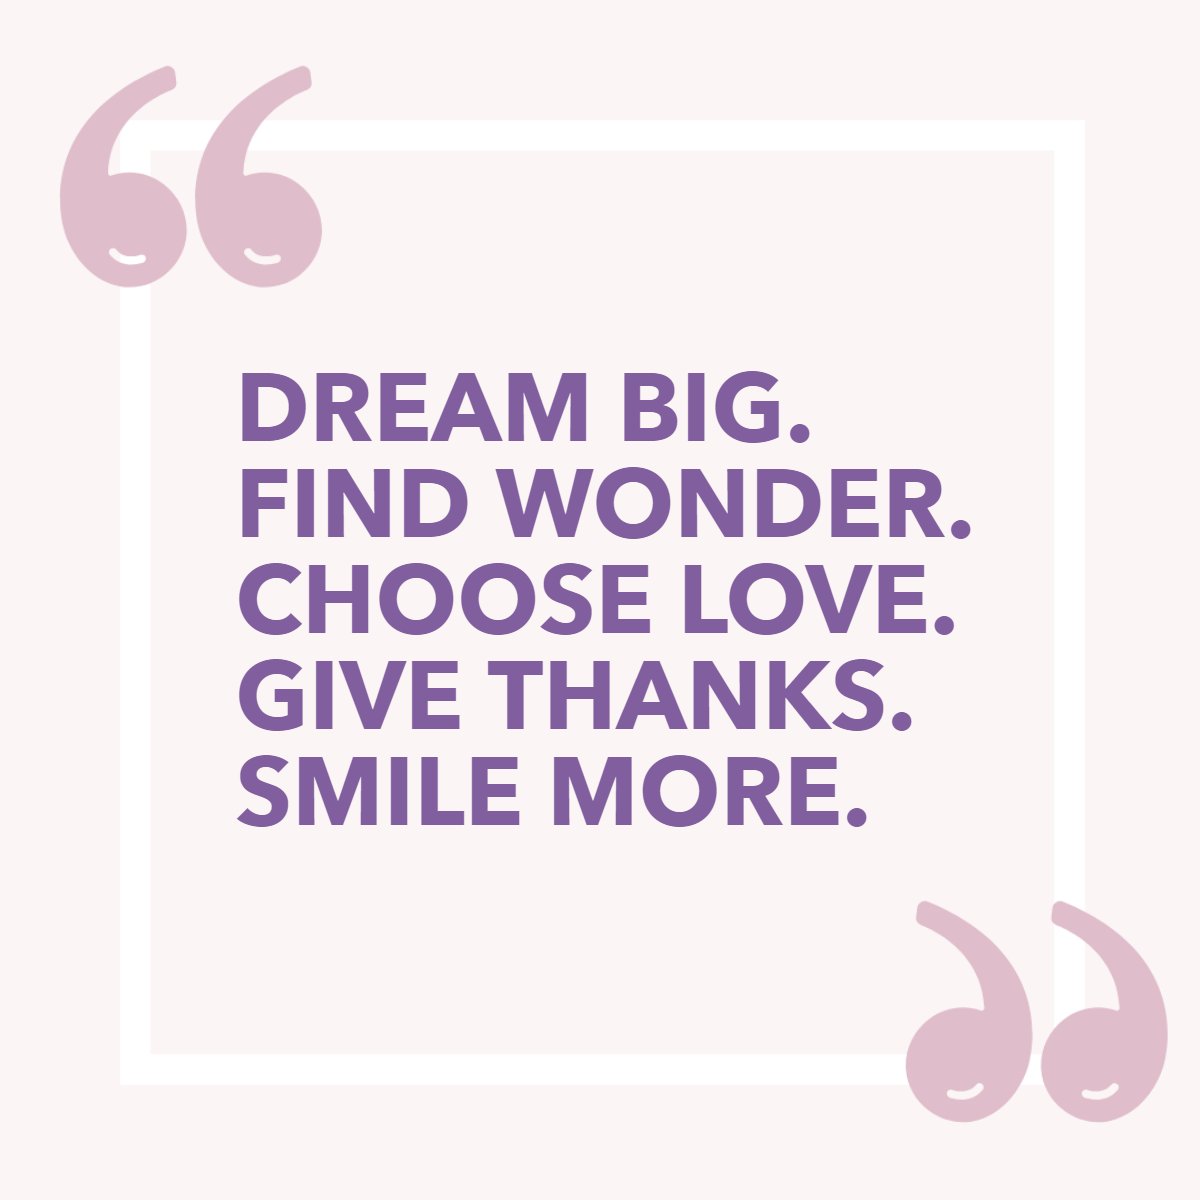 Dream Big.
Find Wonder. 
Choose Love. 
Give Thanks. 
Smile More.🤗

#dreambig   #givethanks   #smilemore   #bigdreams   #ichooselove   #findwonder   #smilemore
#Realestate #fairlawn #paramus #saddlebrook #njrealestate #bergencounty #forsalebuyowner